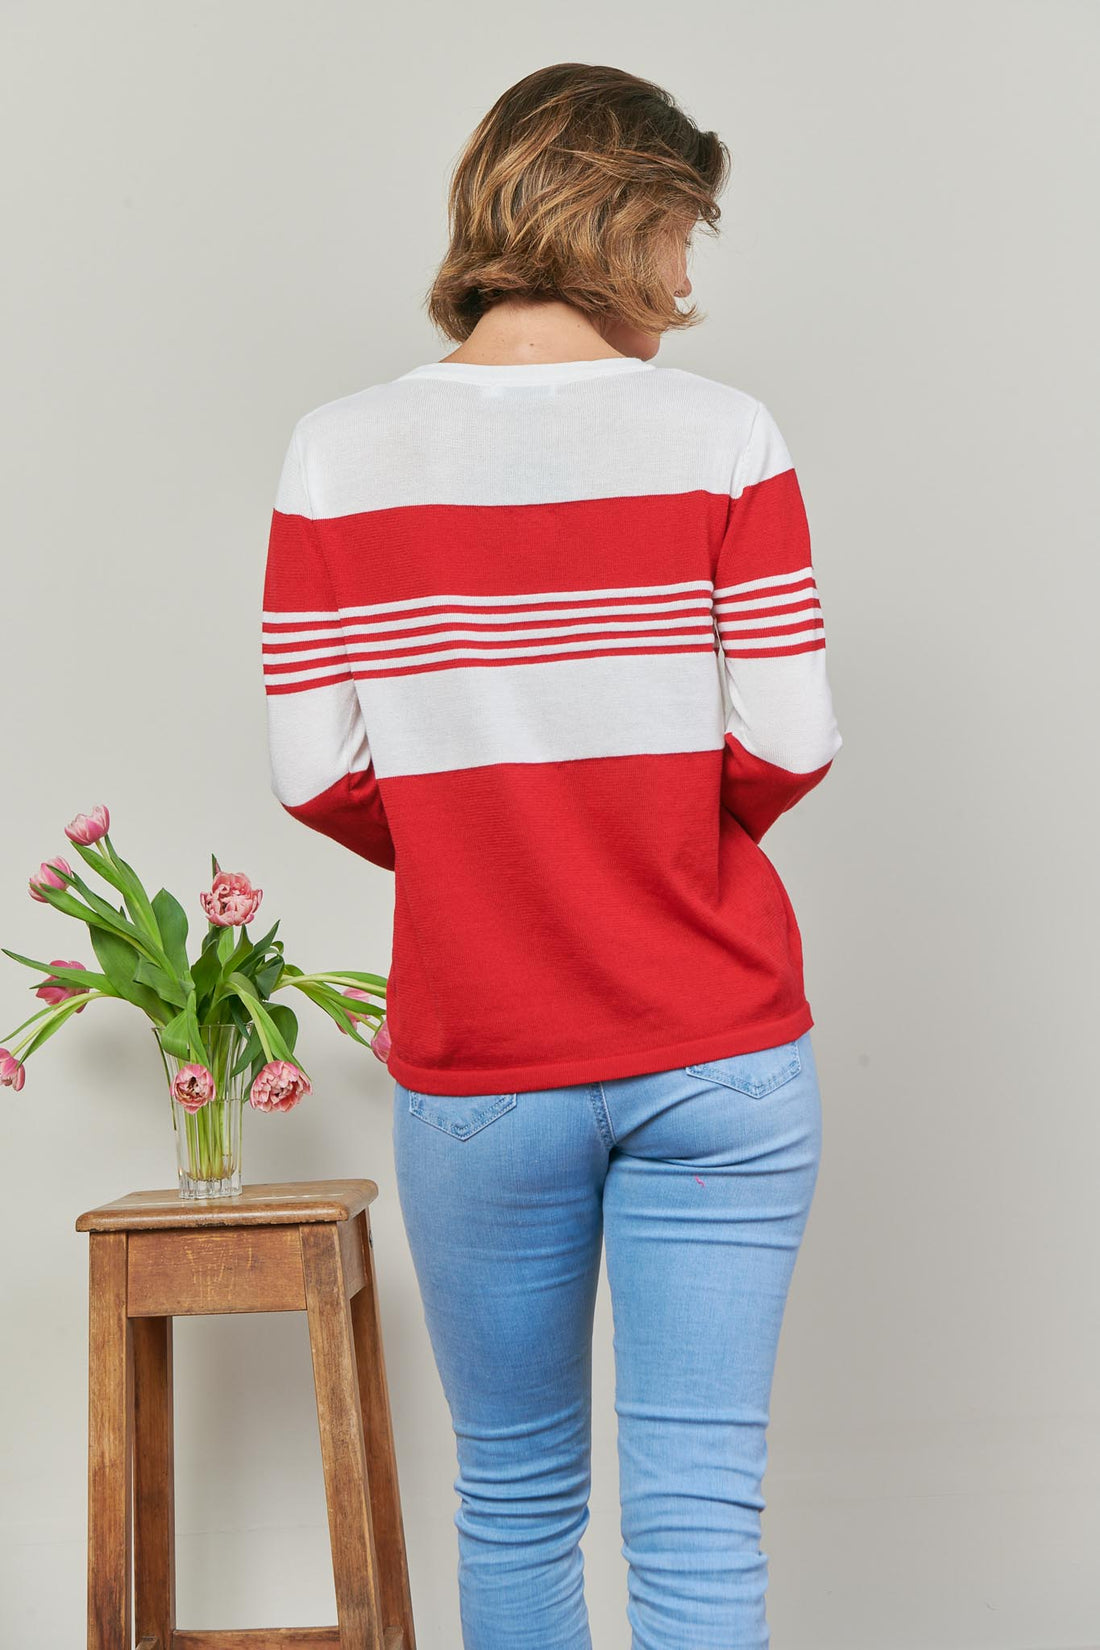 Petra Classic Stripe Knit - Red + White - FINAL SALE